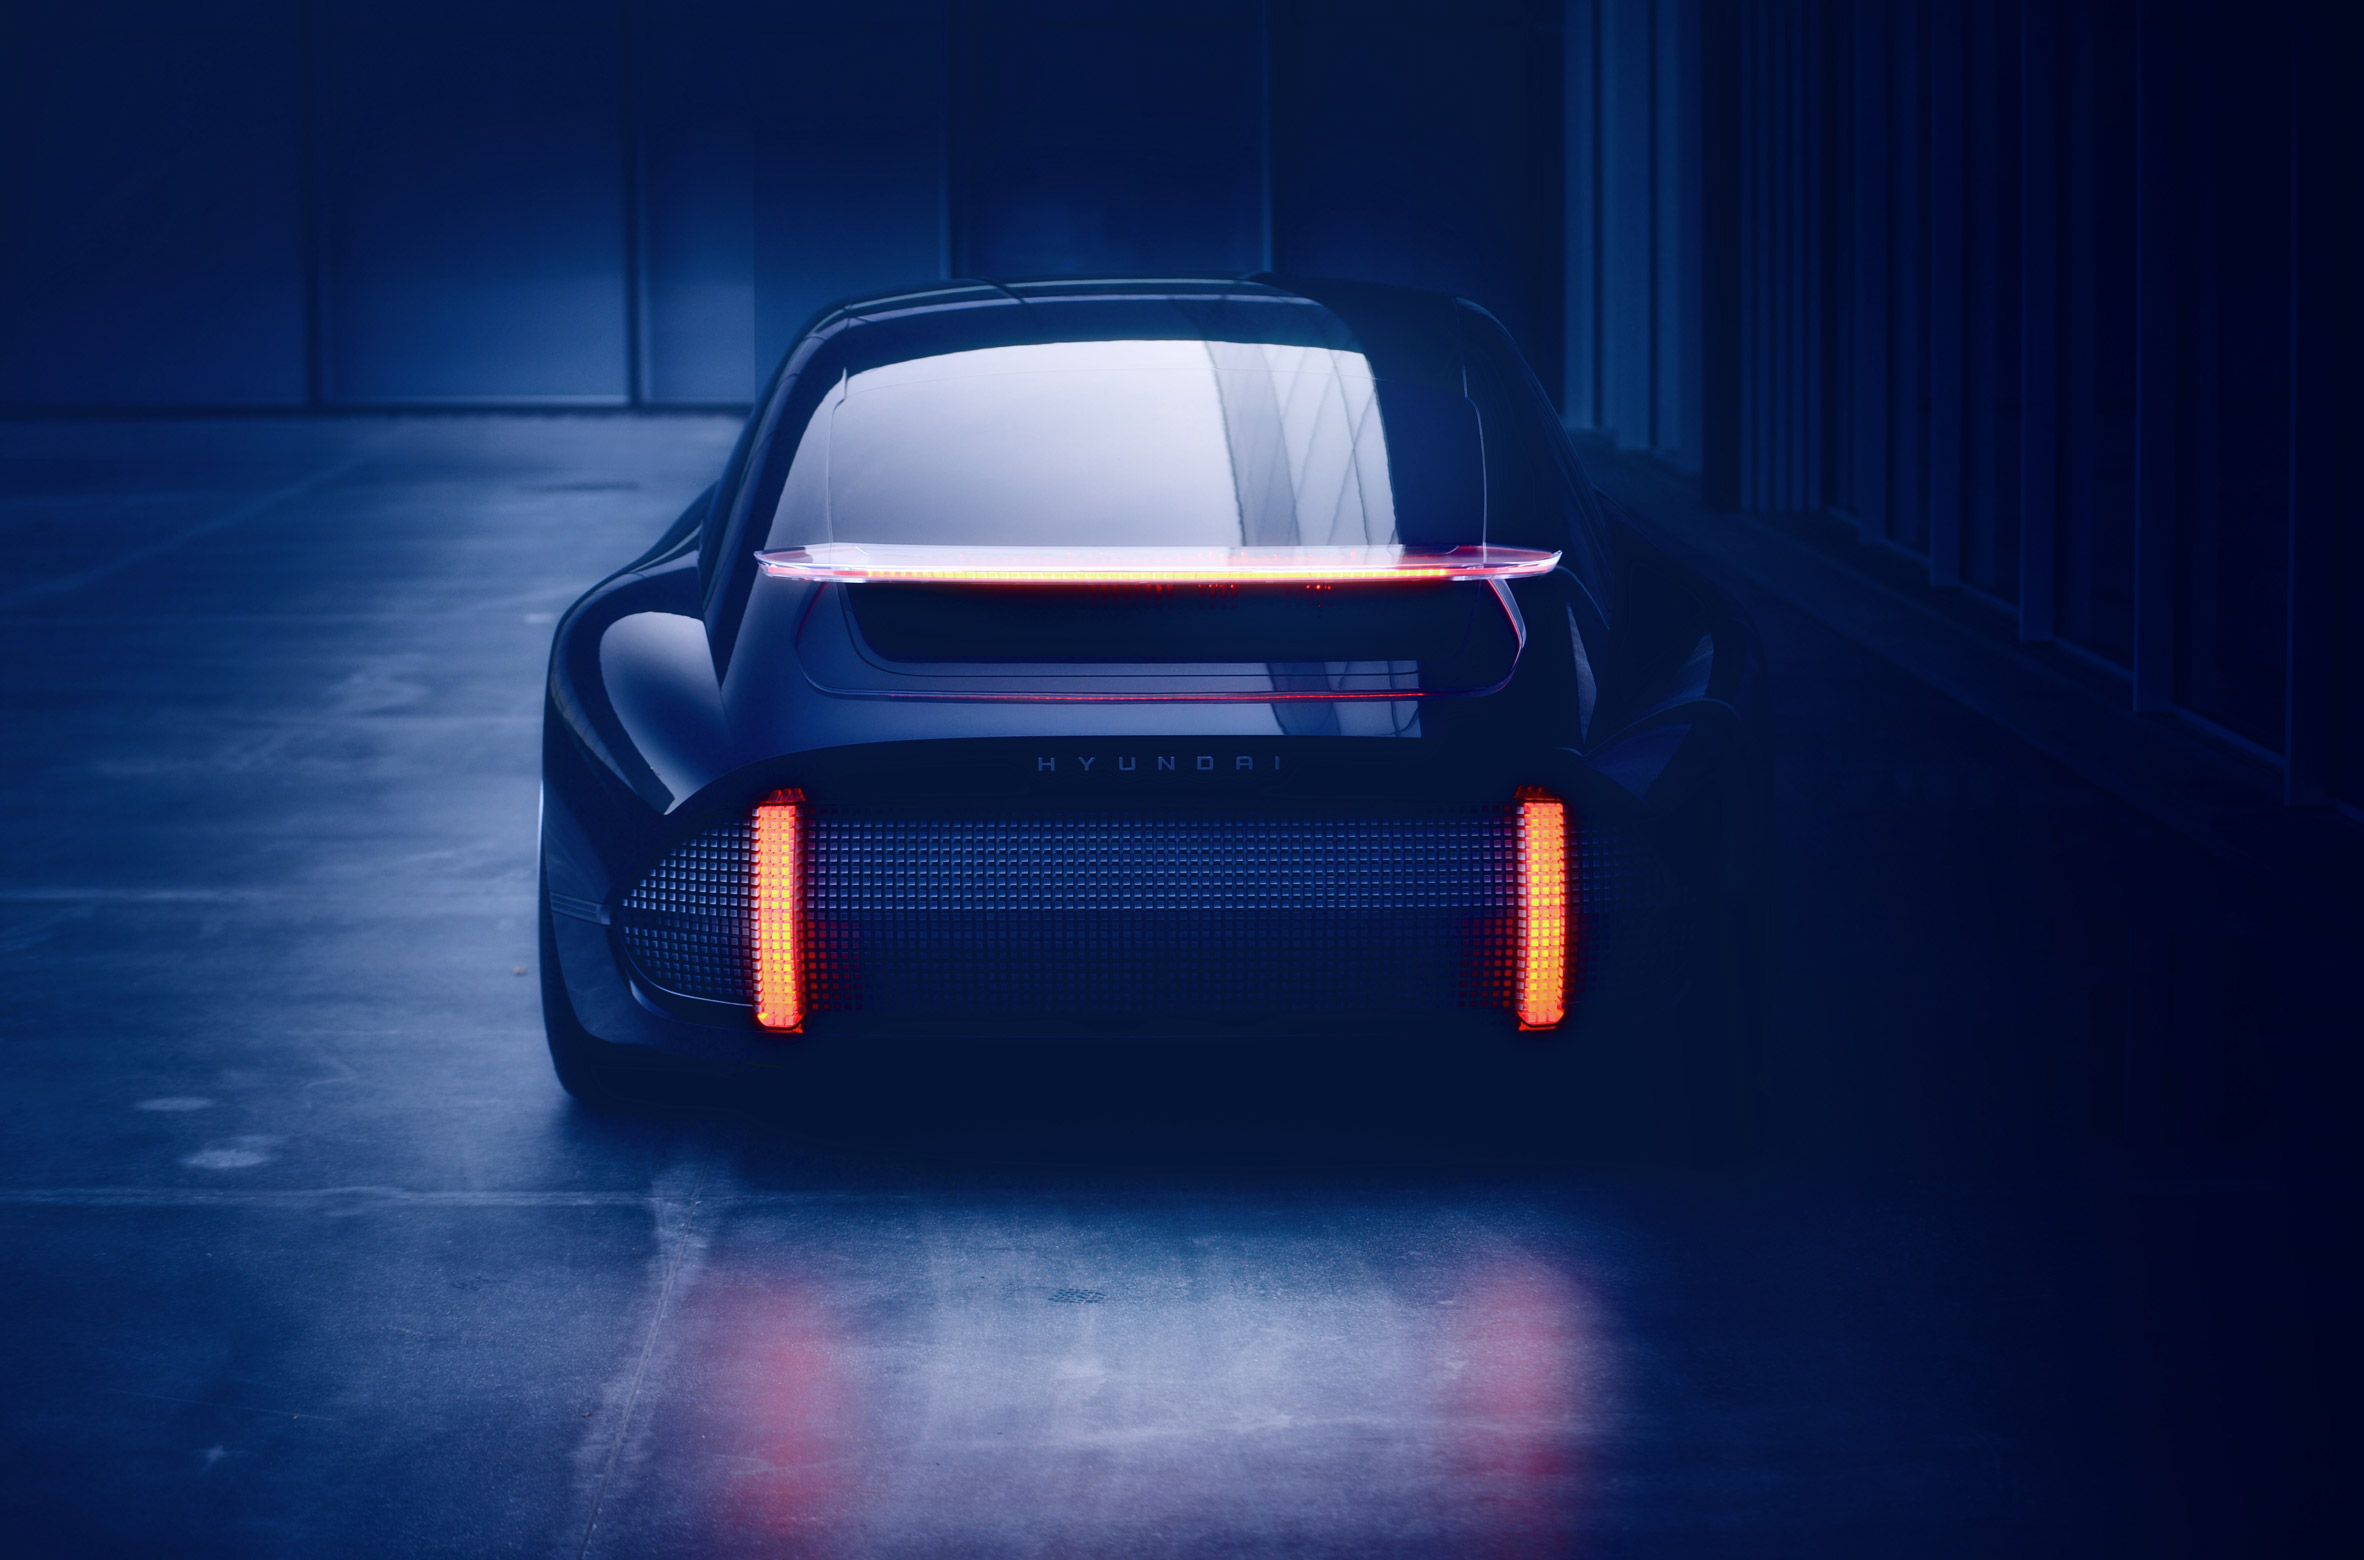 Hyundai unveils Prophecy electric vehicle concept with "sensuous" design